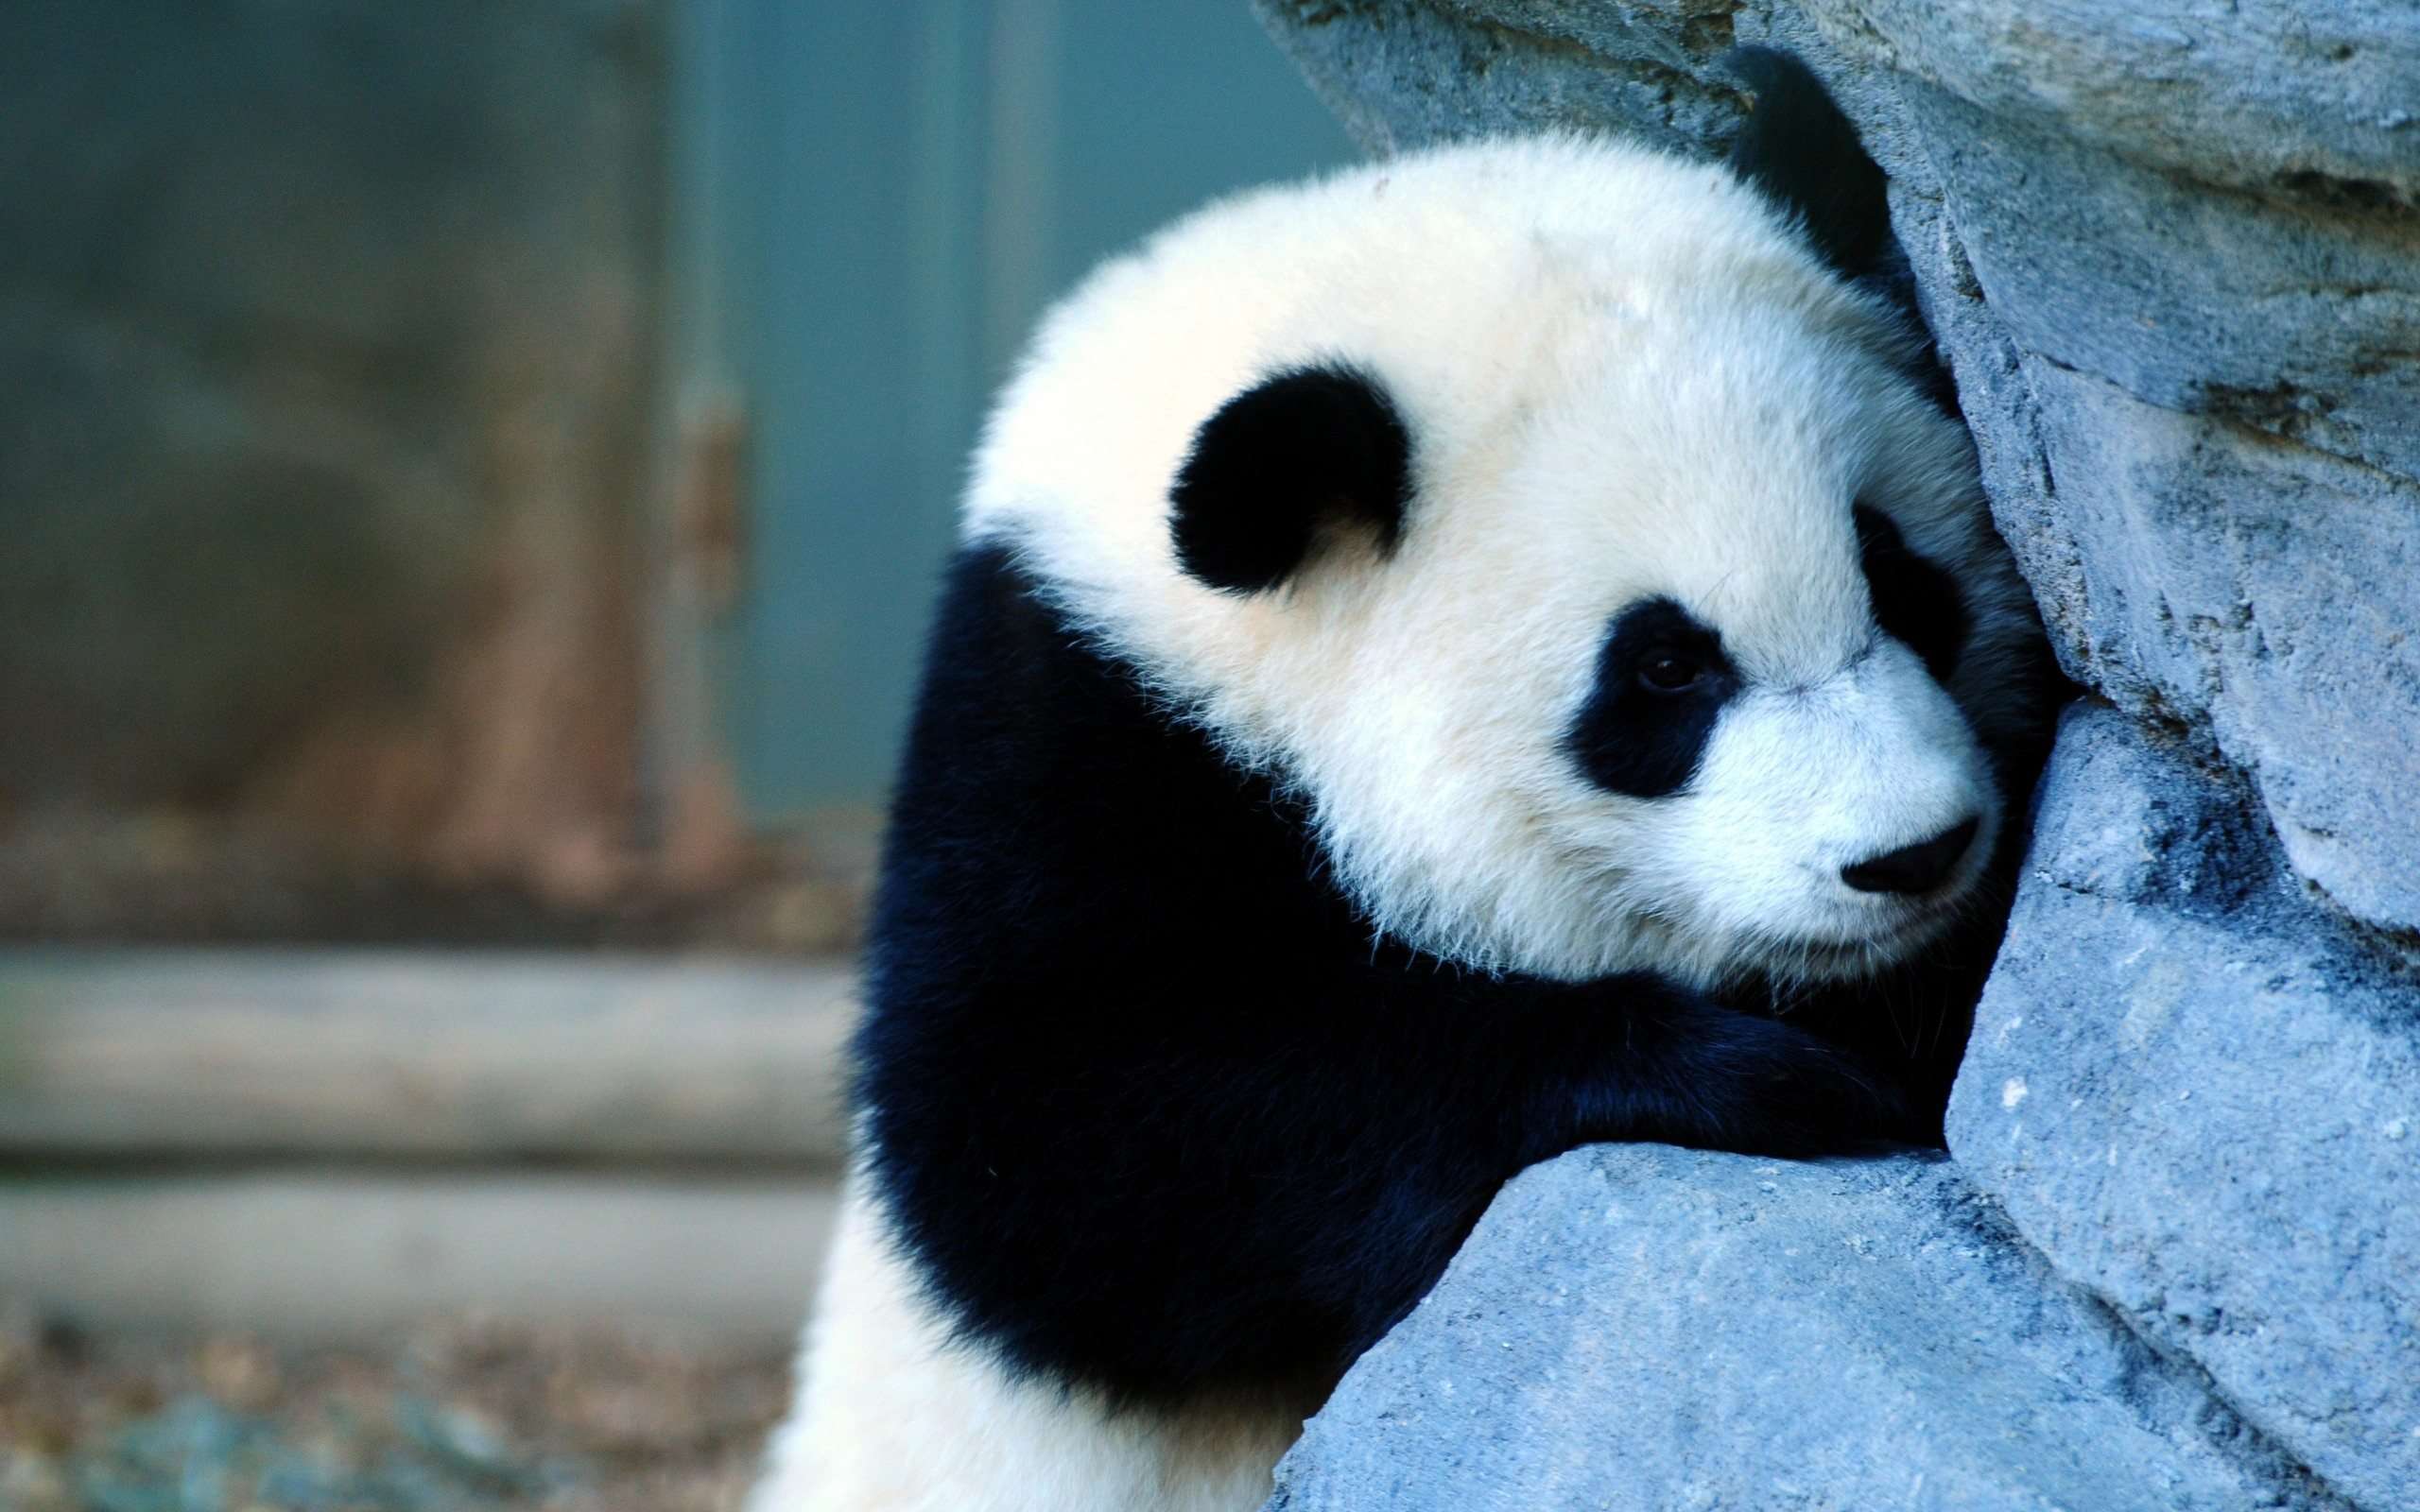 hd cute panda wallpaper tumblr HD desktop wallpaper cool 1080p free